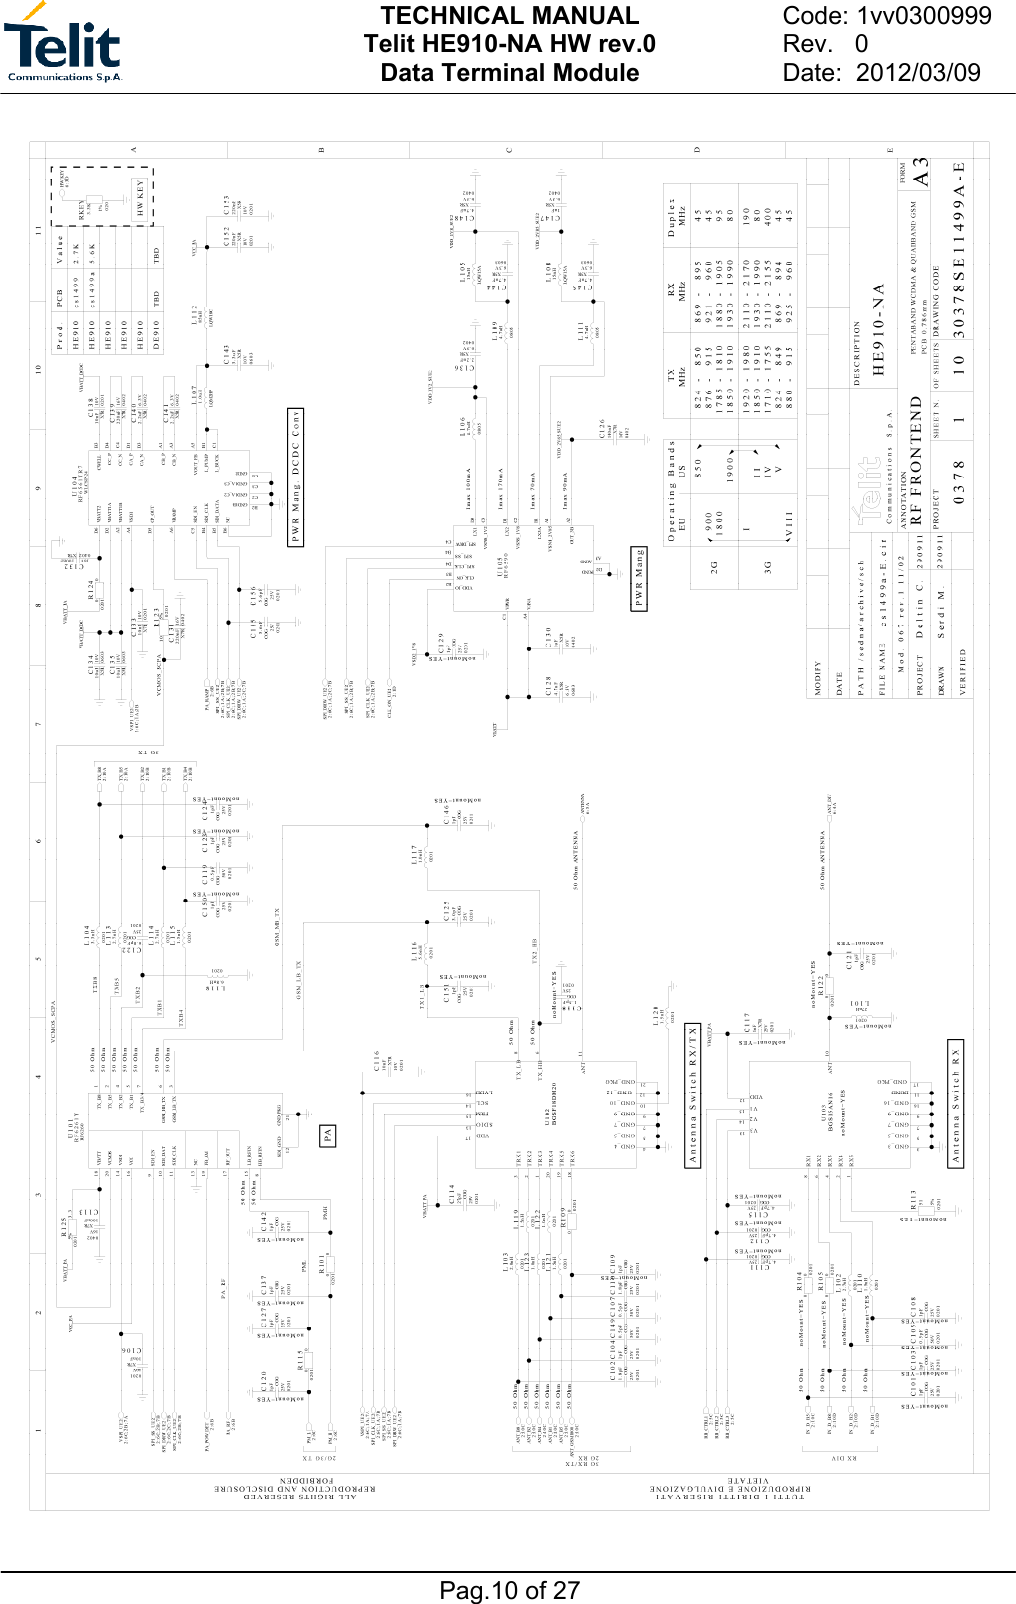 TECHNICAL MANUAL Telit HE910-NA HW rev.0 Data Terminal Module   Pag.10 of 27 Code: 1vv0300999    Rev.   0  Date:  2012/03/09  